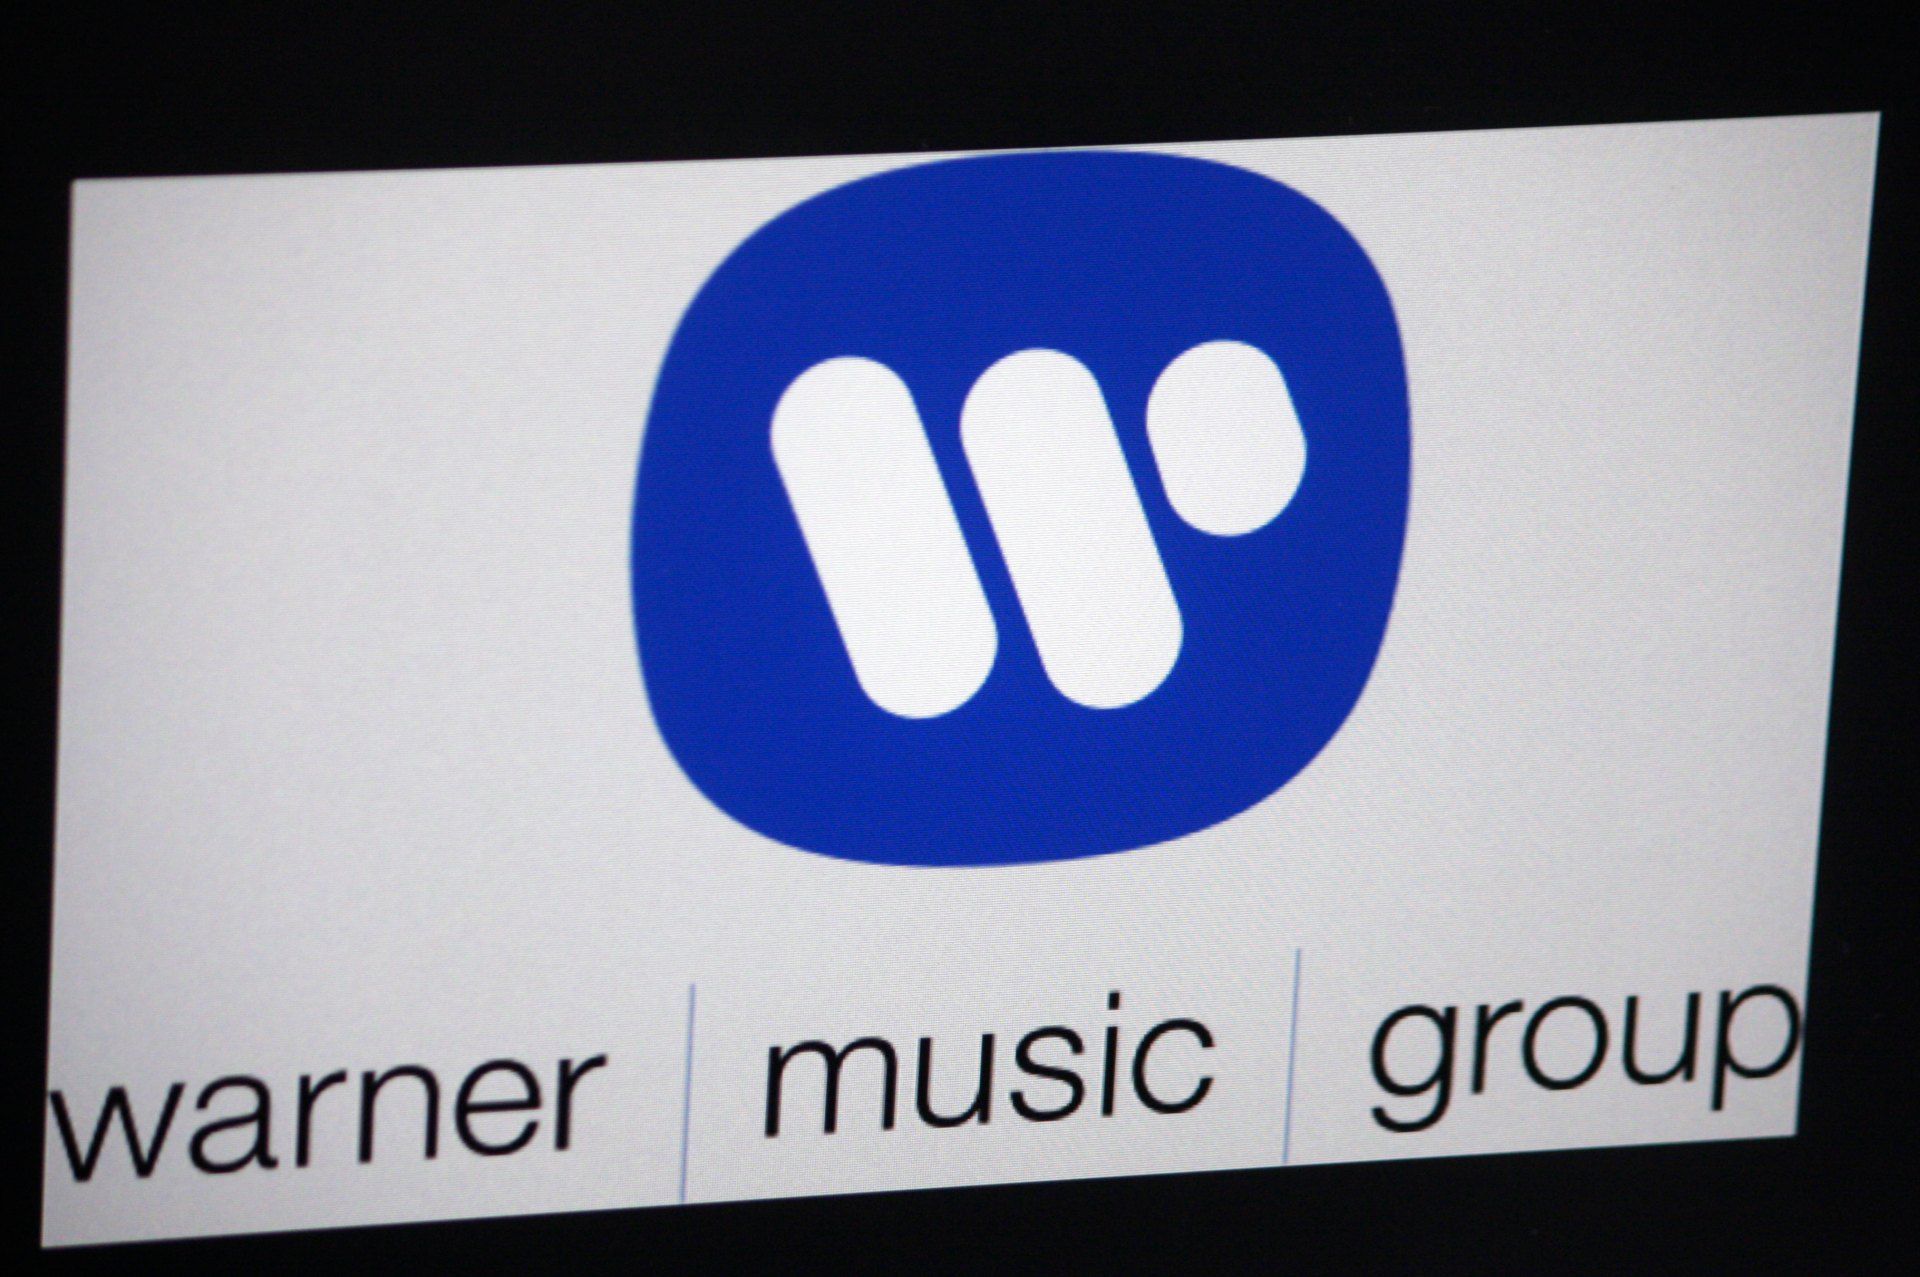 Warner Music Group logo - data breach